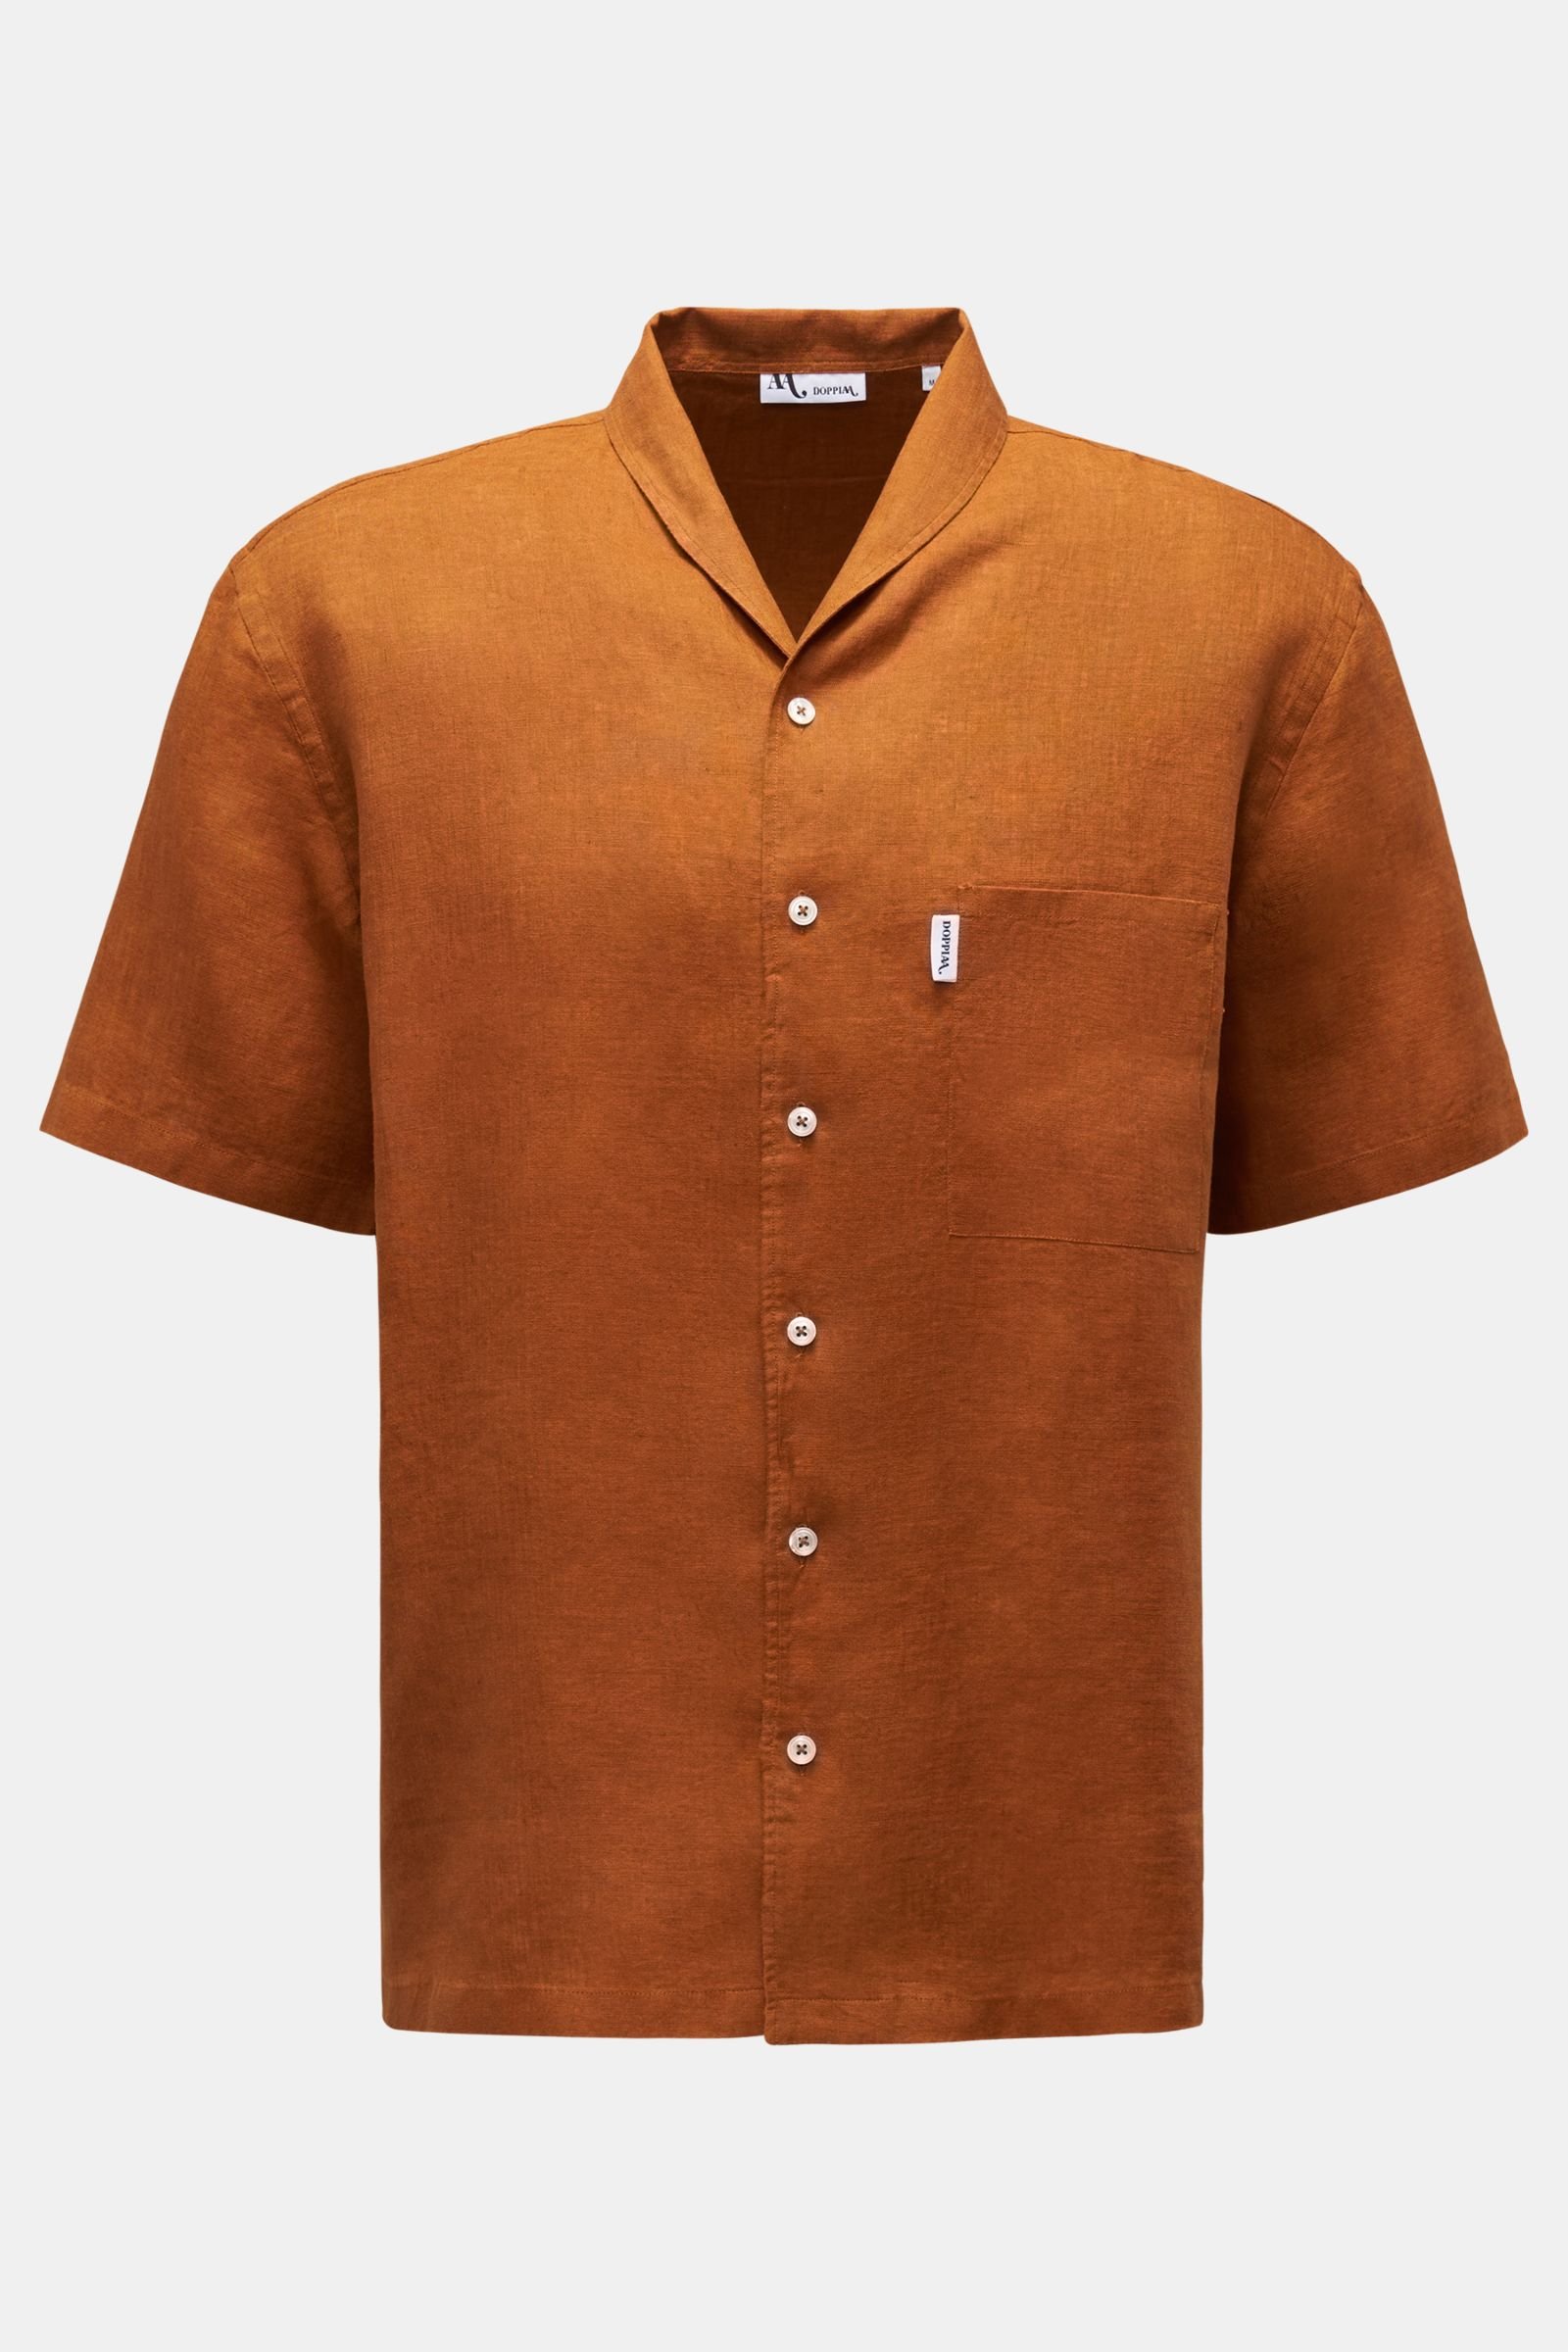 Linen short sleeve shirt 'Aarpino' shawl collar rust brown